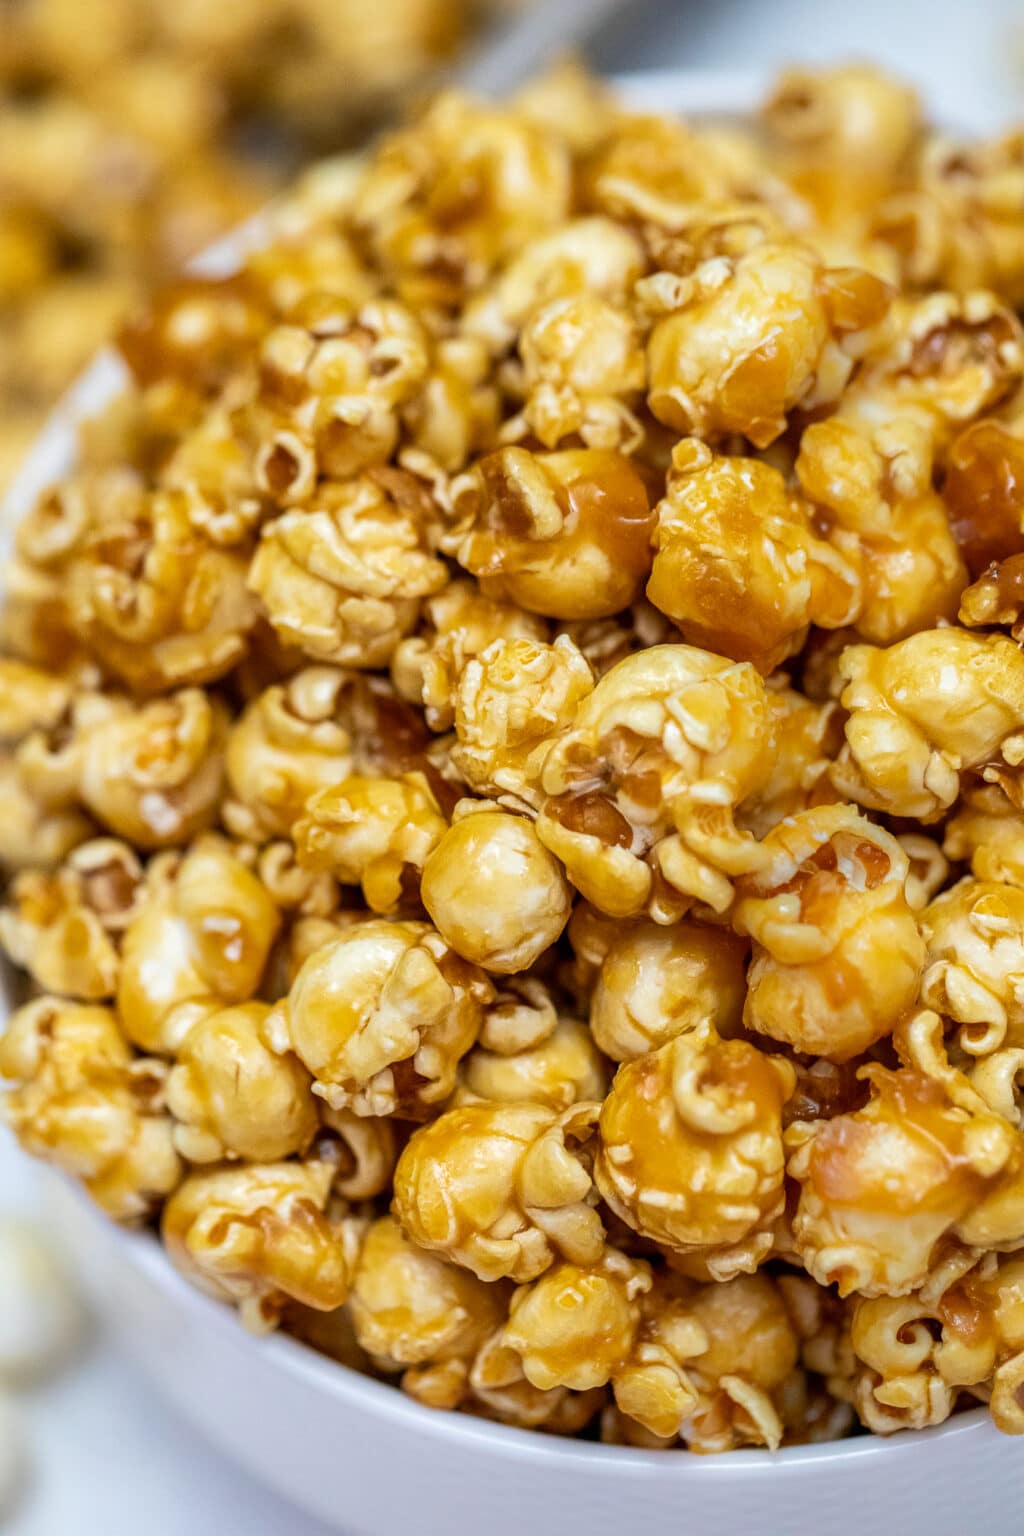 Homemade Caramel Popcorn Recipe [Video] - S&SM